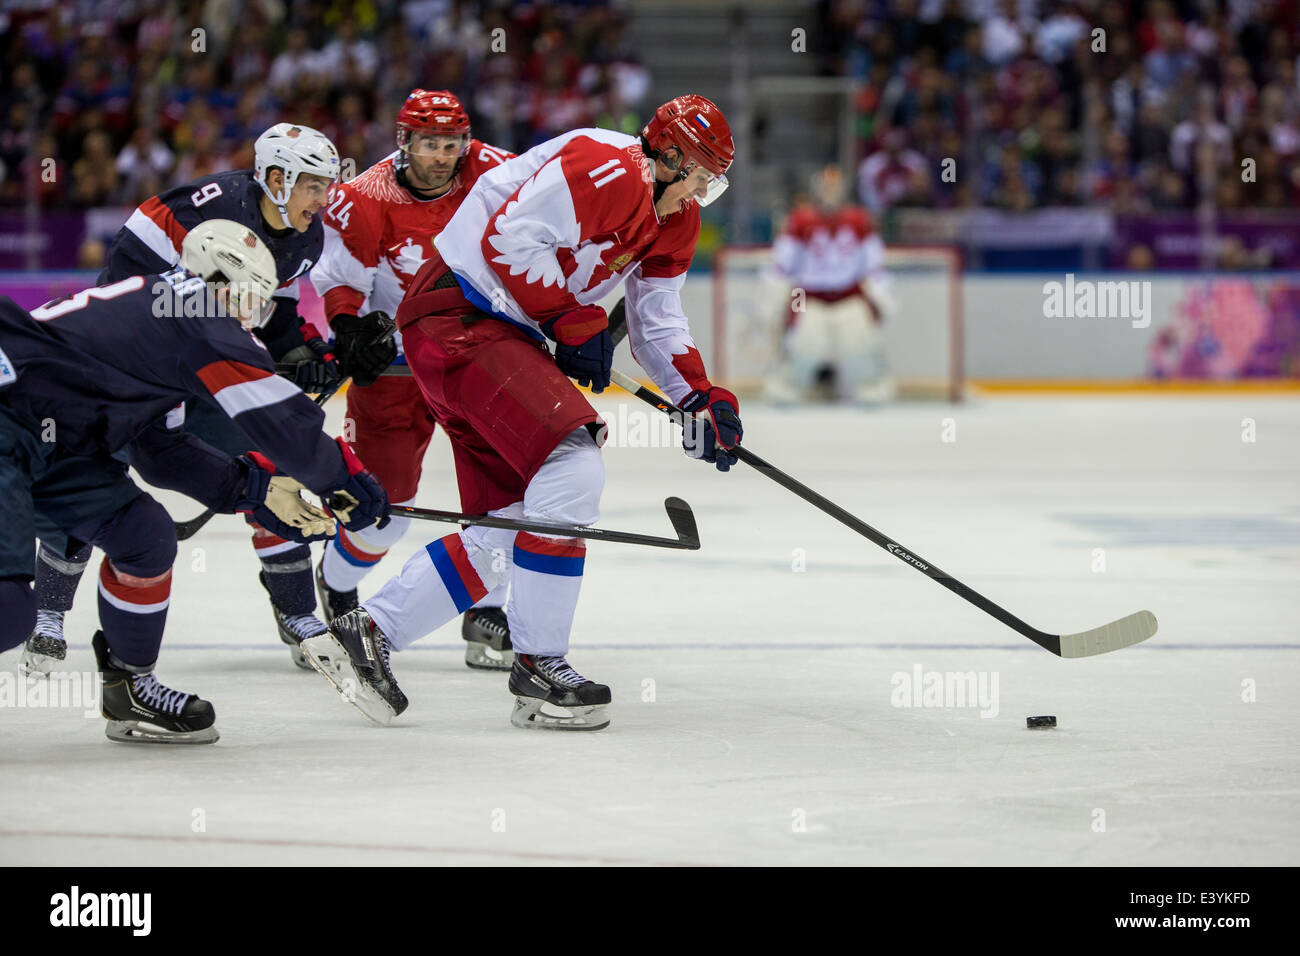 Yevgeni Malkin (RUS) during ice hockey game vs USA at the Olympic Winter Games, Sochi 2014 Stock Photo